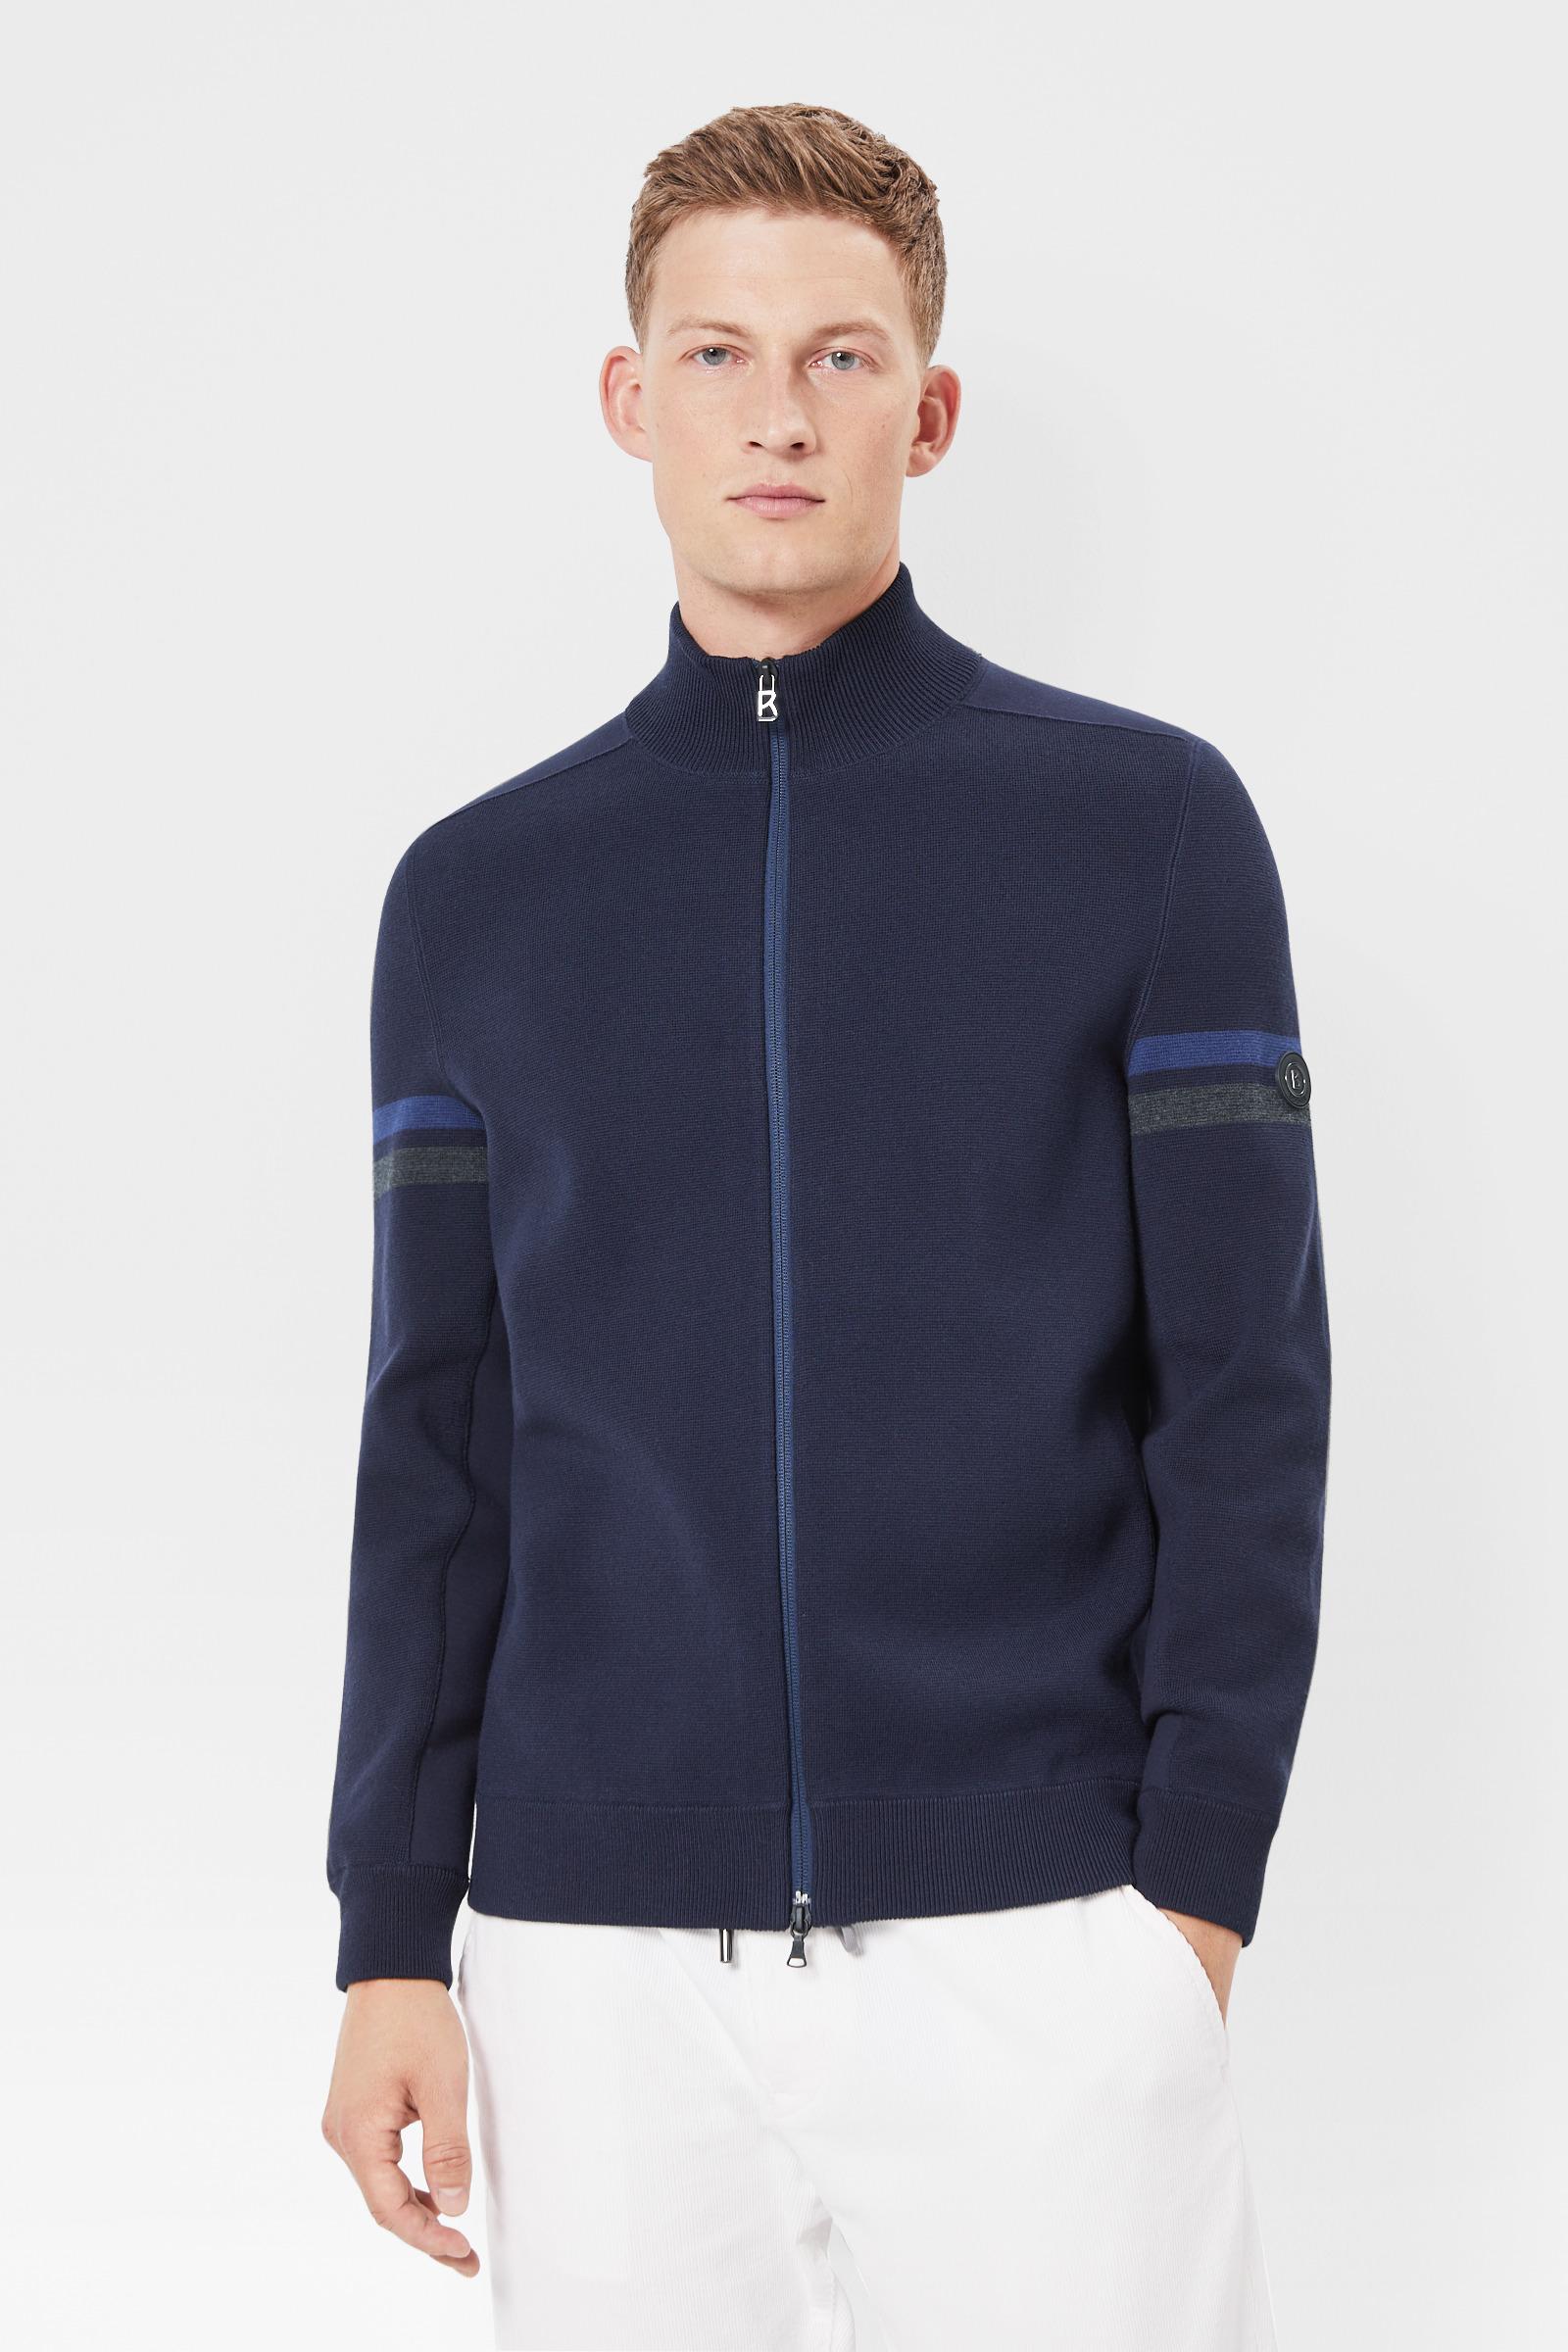 Bogner Wool Perth Knit Jacket In Navy Blue for Men - Lyst